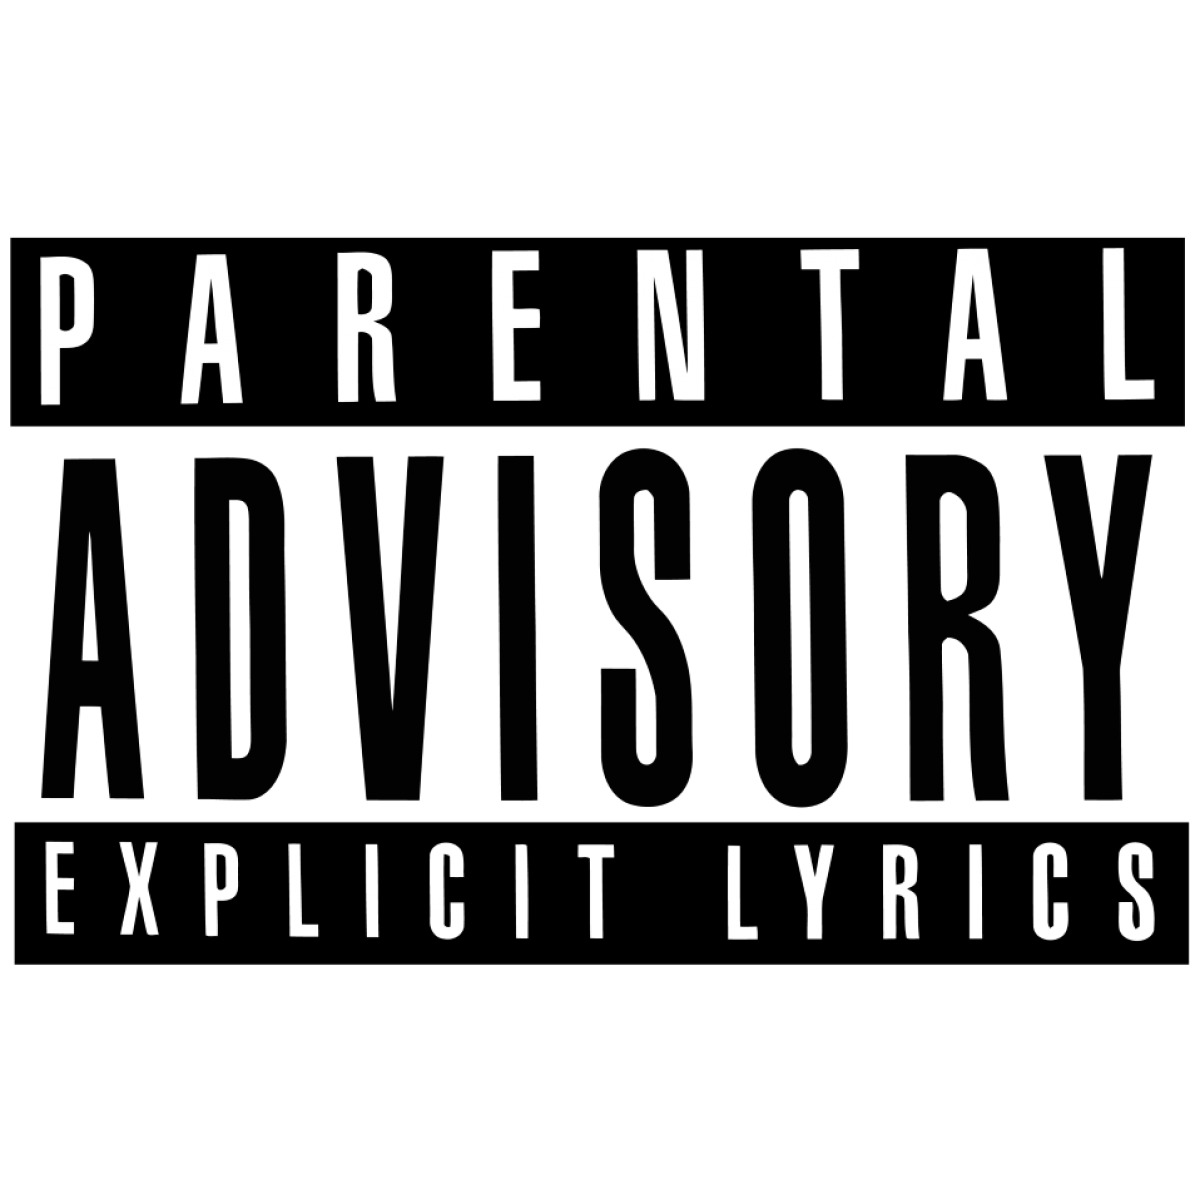 Parental Advisory Explicit Lyrics icons